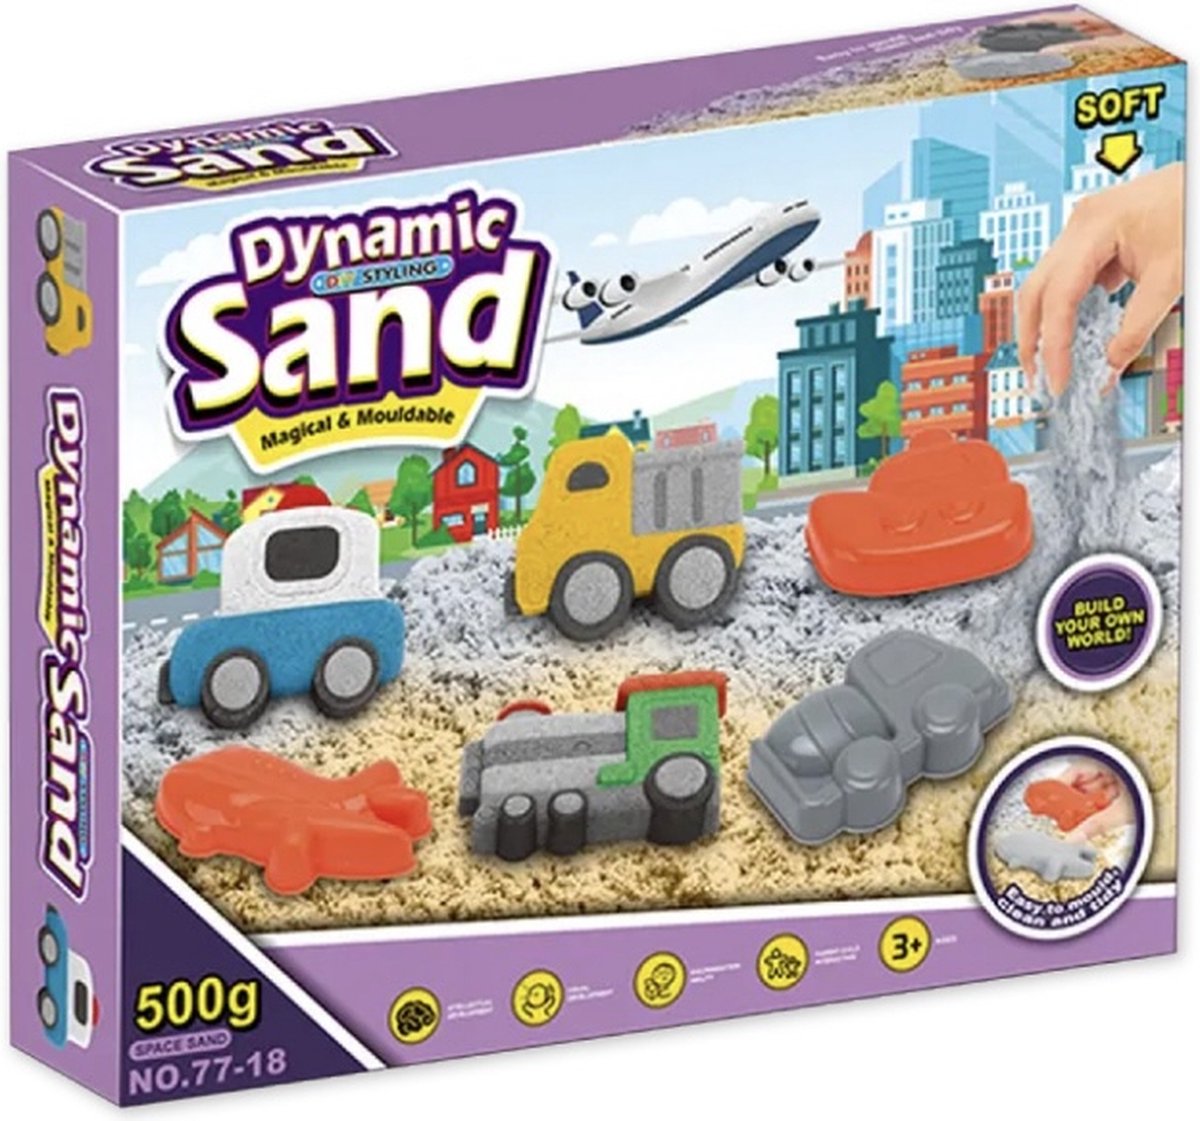 Magic Sand - Kinetisch Zand - Kinetic Sand - Speelzand - 500g